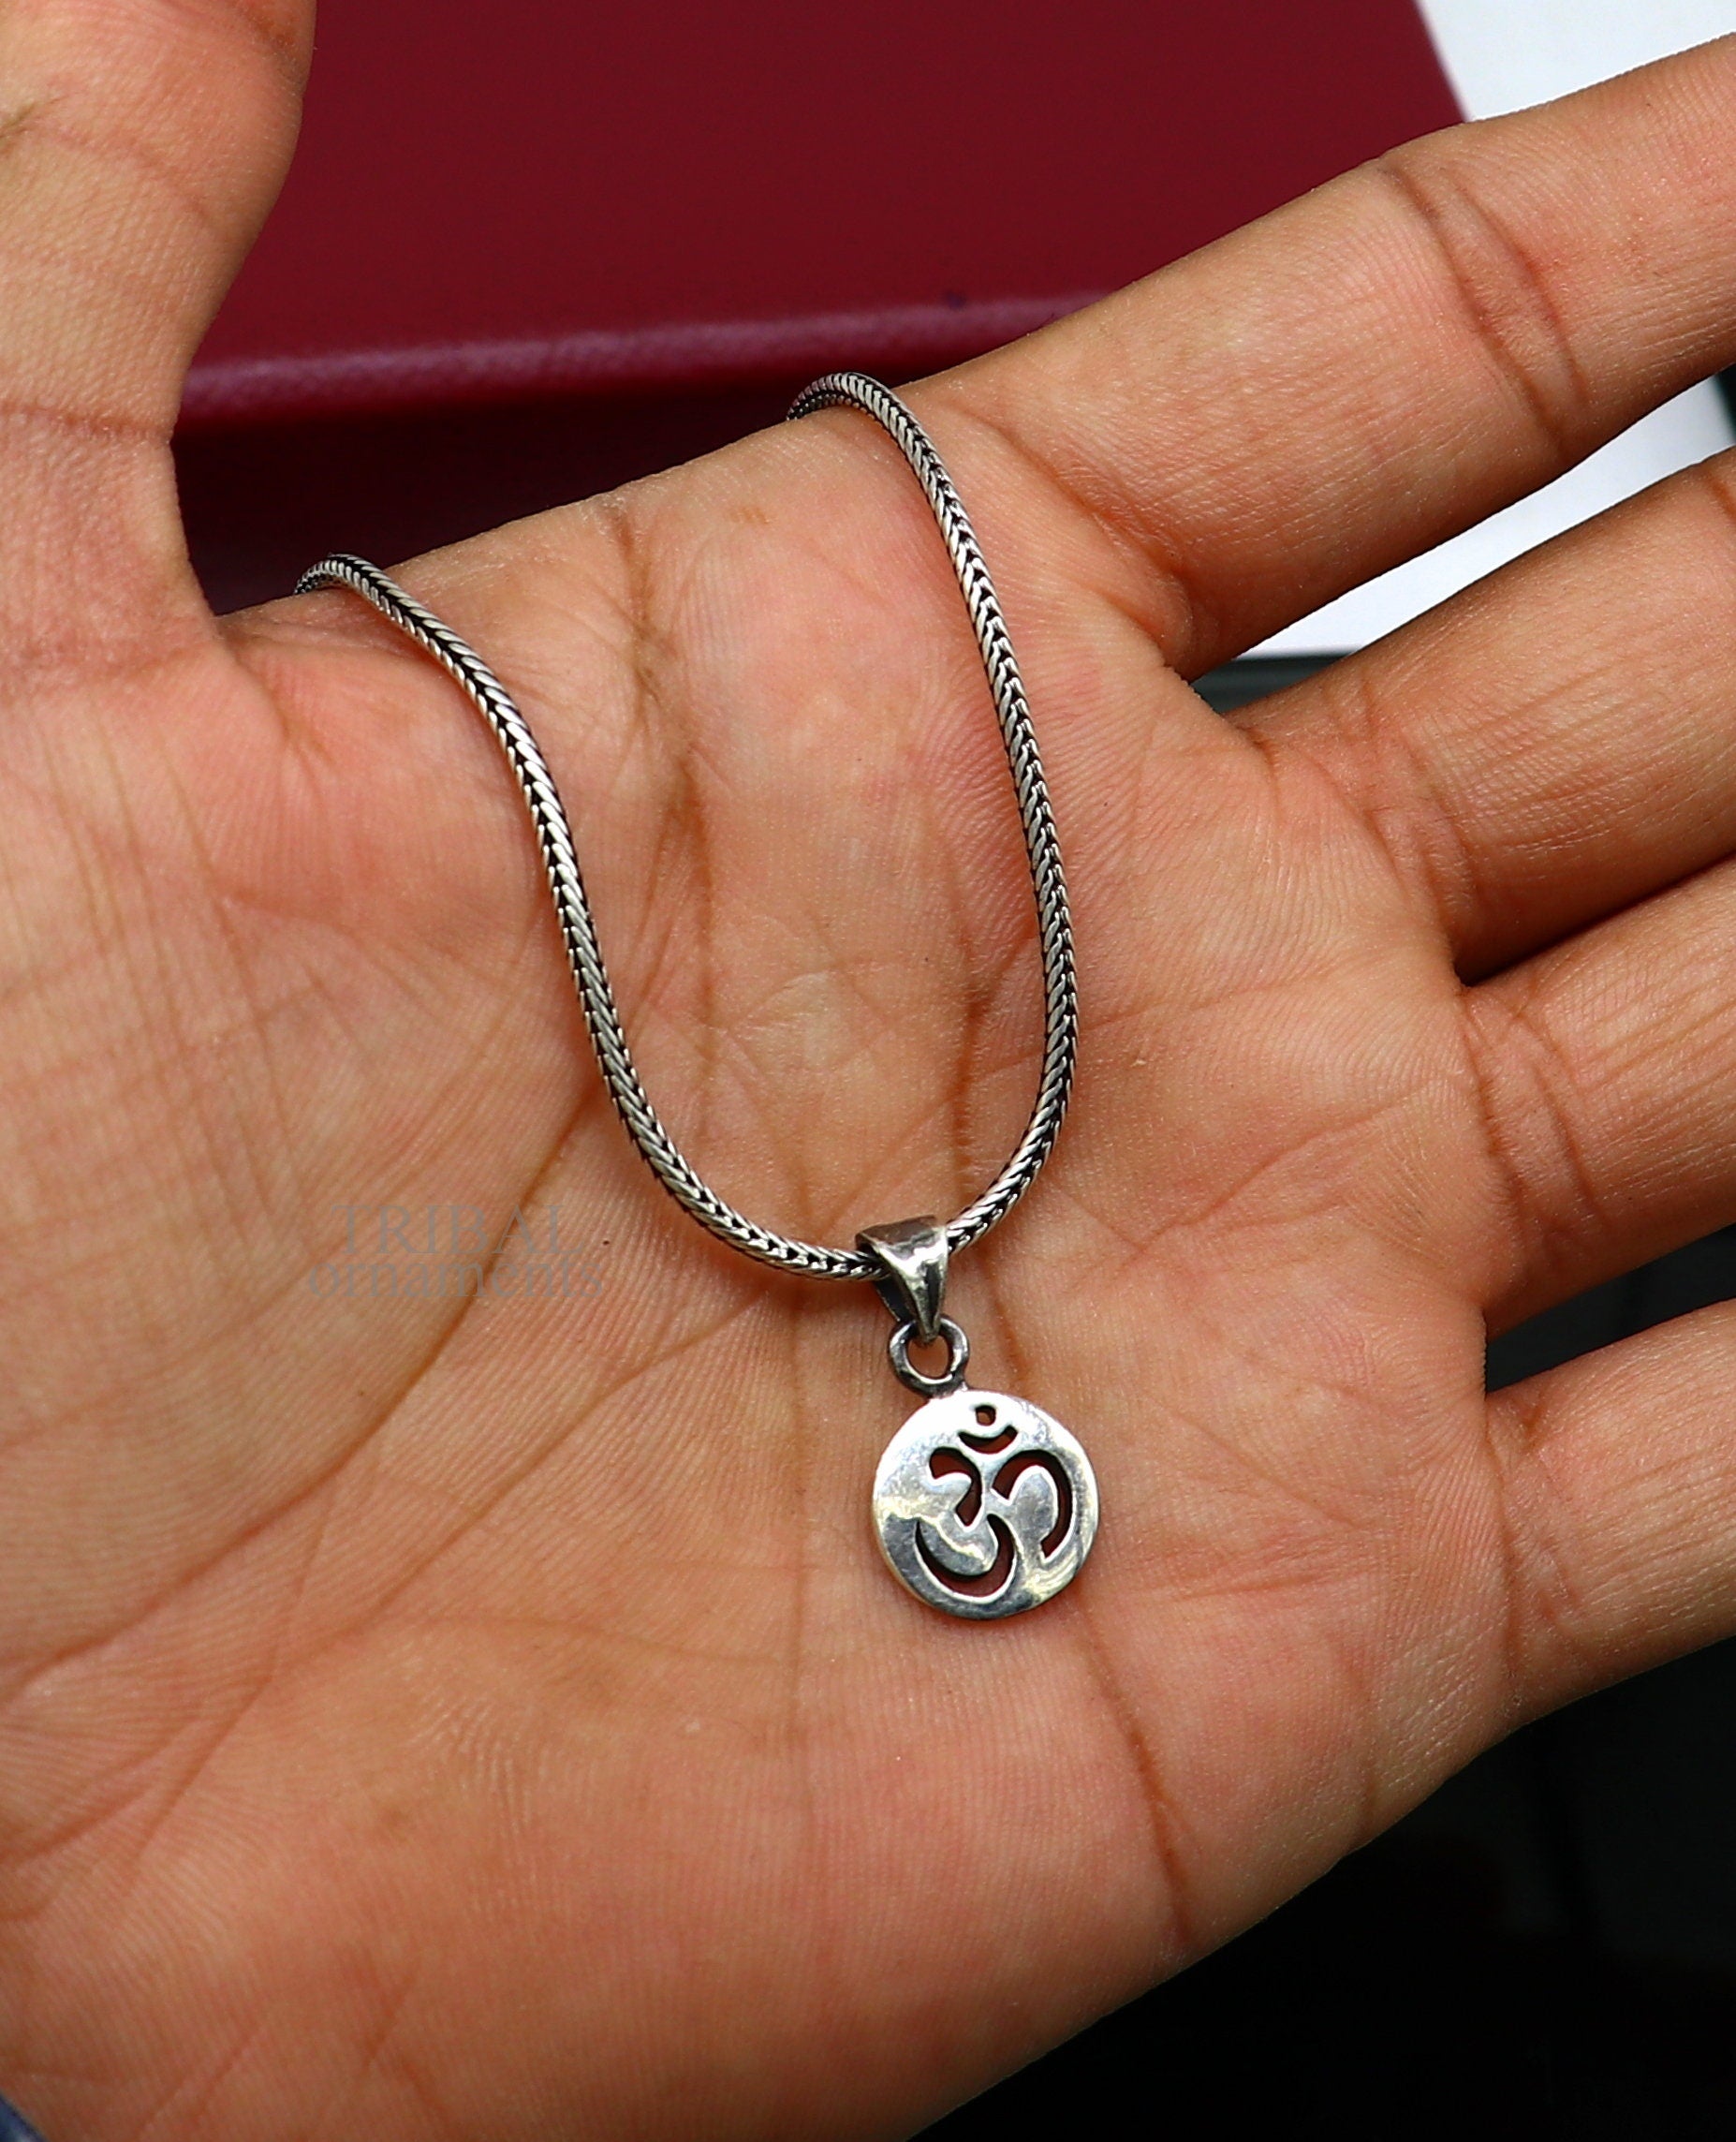 925 sterling silver handmade Hindu mantra 'Aum' OM pendant, amazing stylish unisex pendant personalized jewelry tribal jewelry ssp1655 - TRIBAL ORNAMENTS